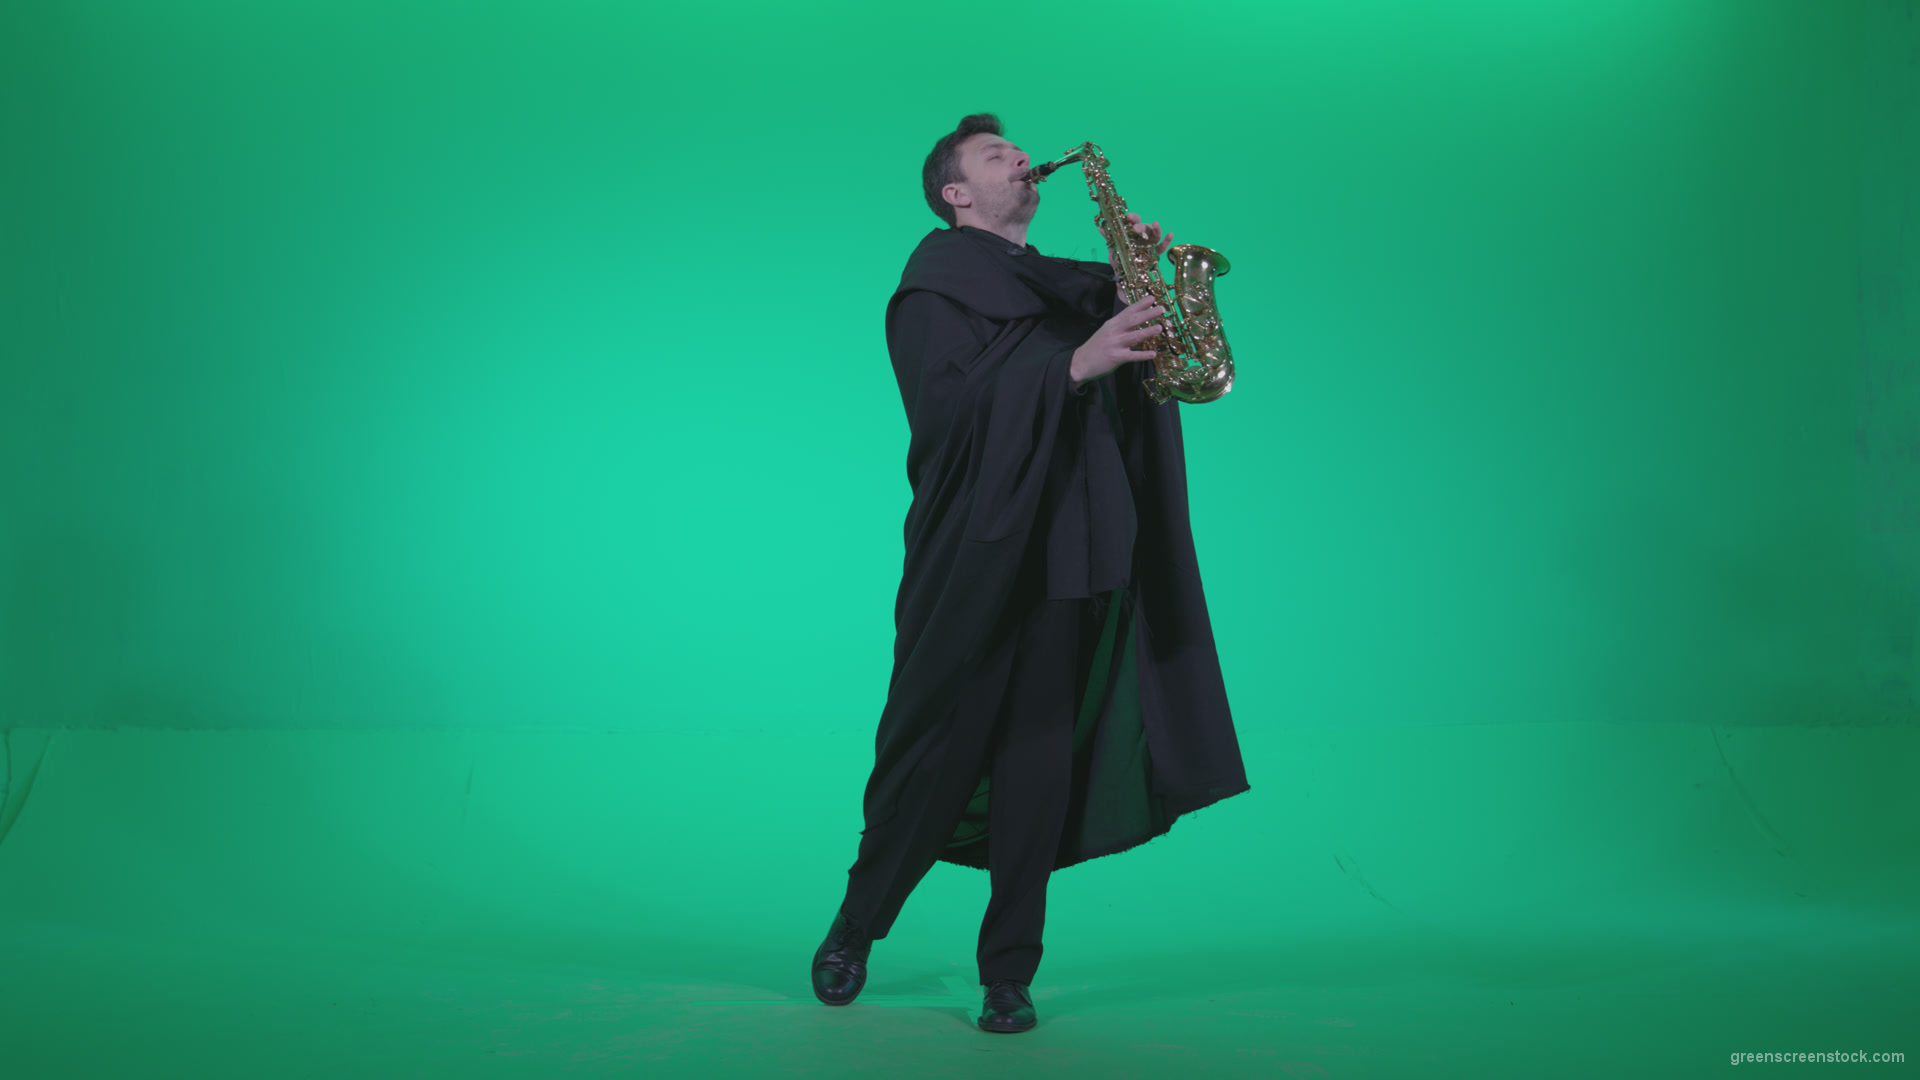 Gothic-Saxophone-Virtuoso-Performer-s3_009 Green Screen Stock